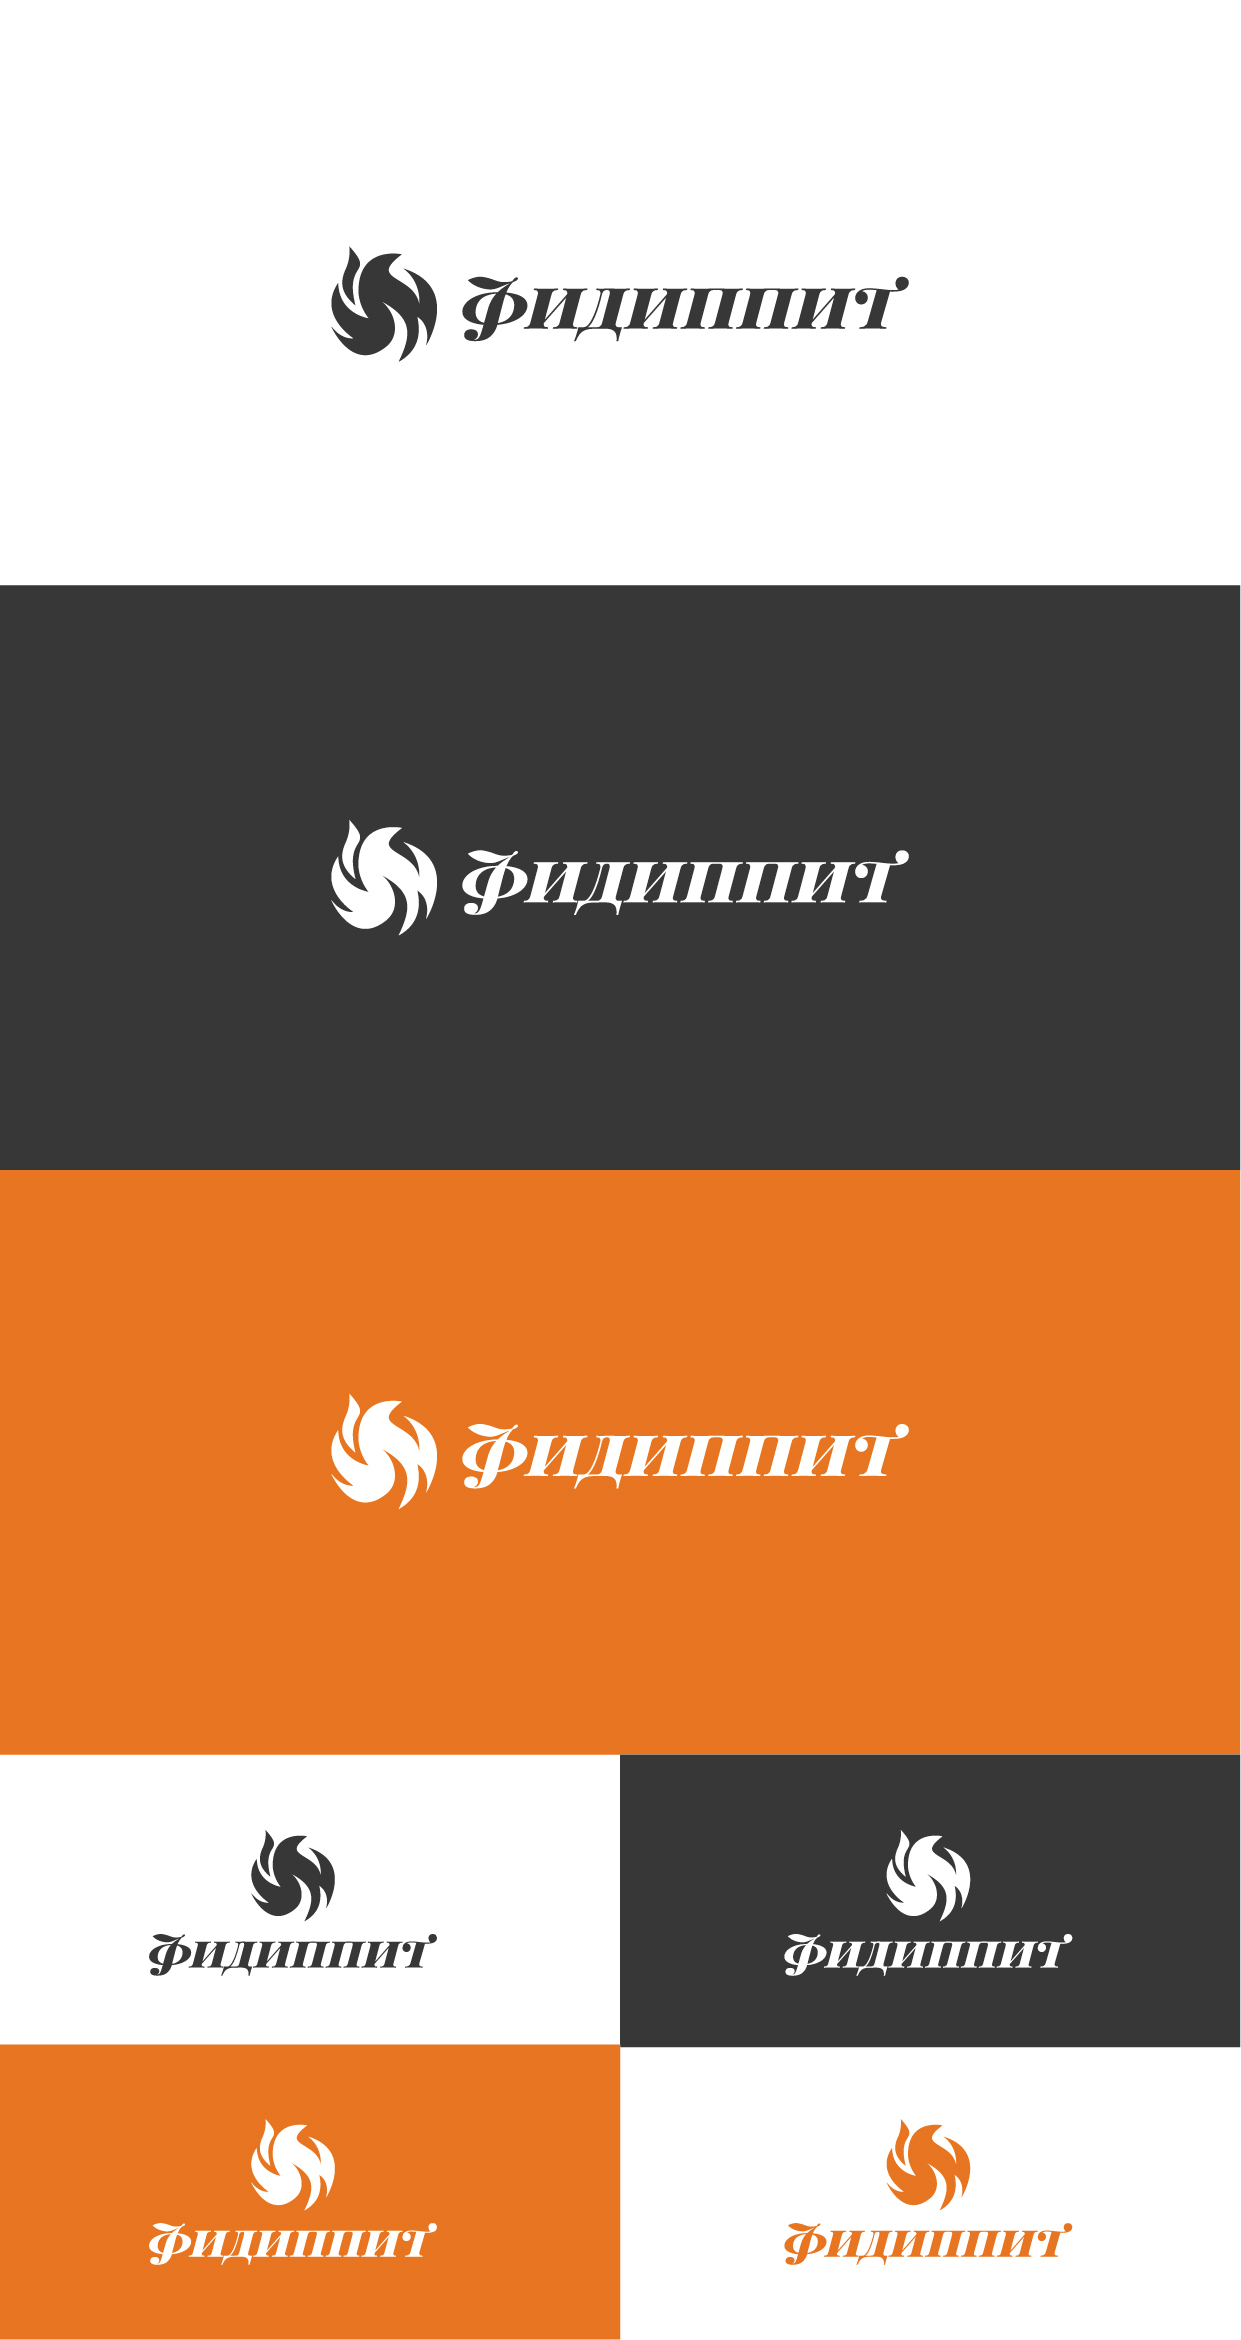 Вариант Логотипа С Огнем